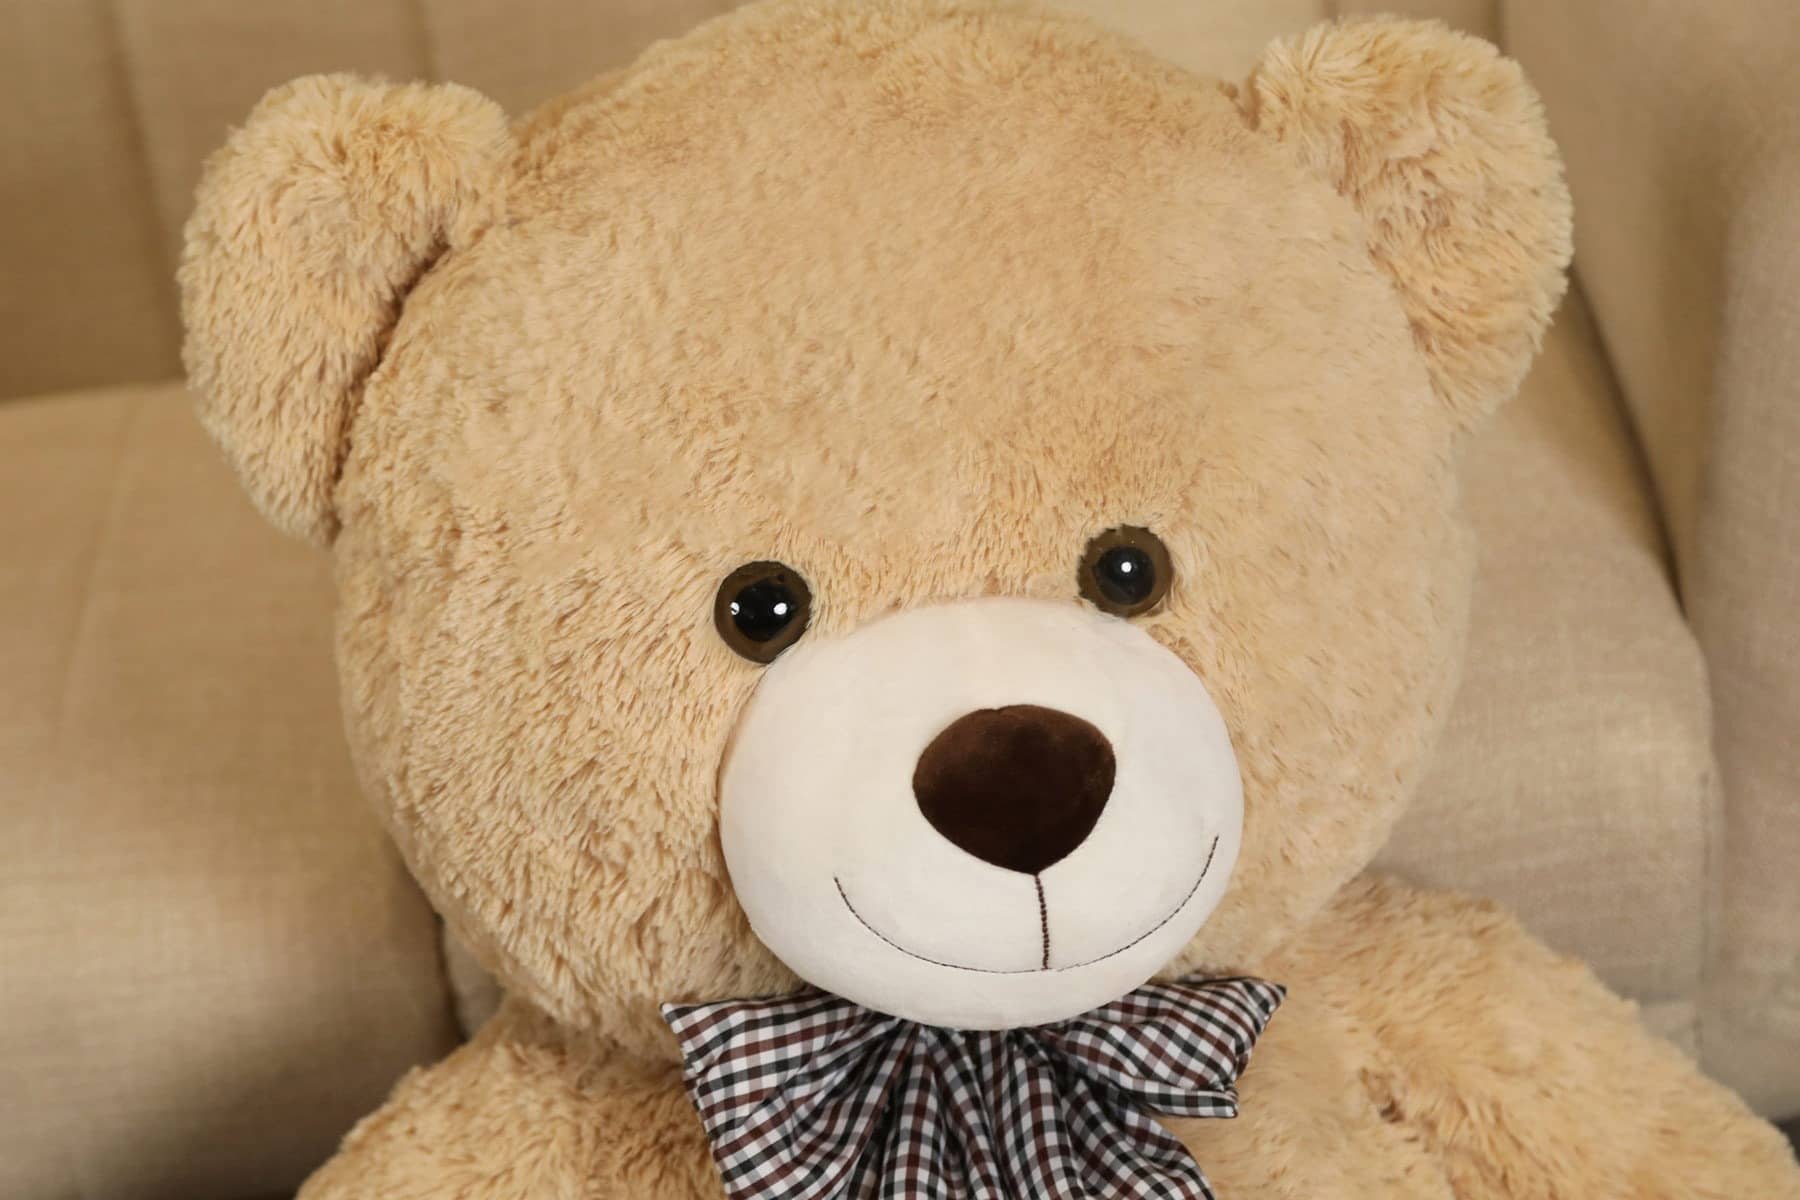 High Quality Giant American Bear Plush Doll Soft Stuffed Animal Teddy Bear Toys Kids Girls Valentine Birthday Gift Room Decor